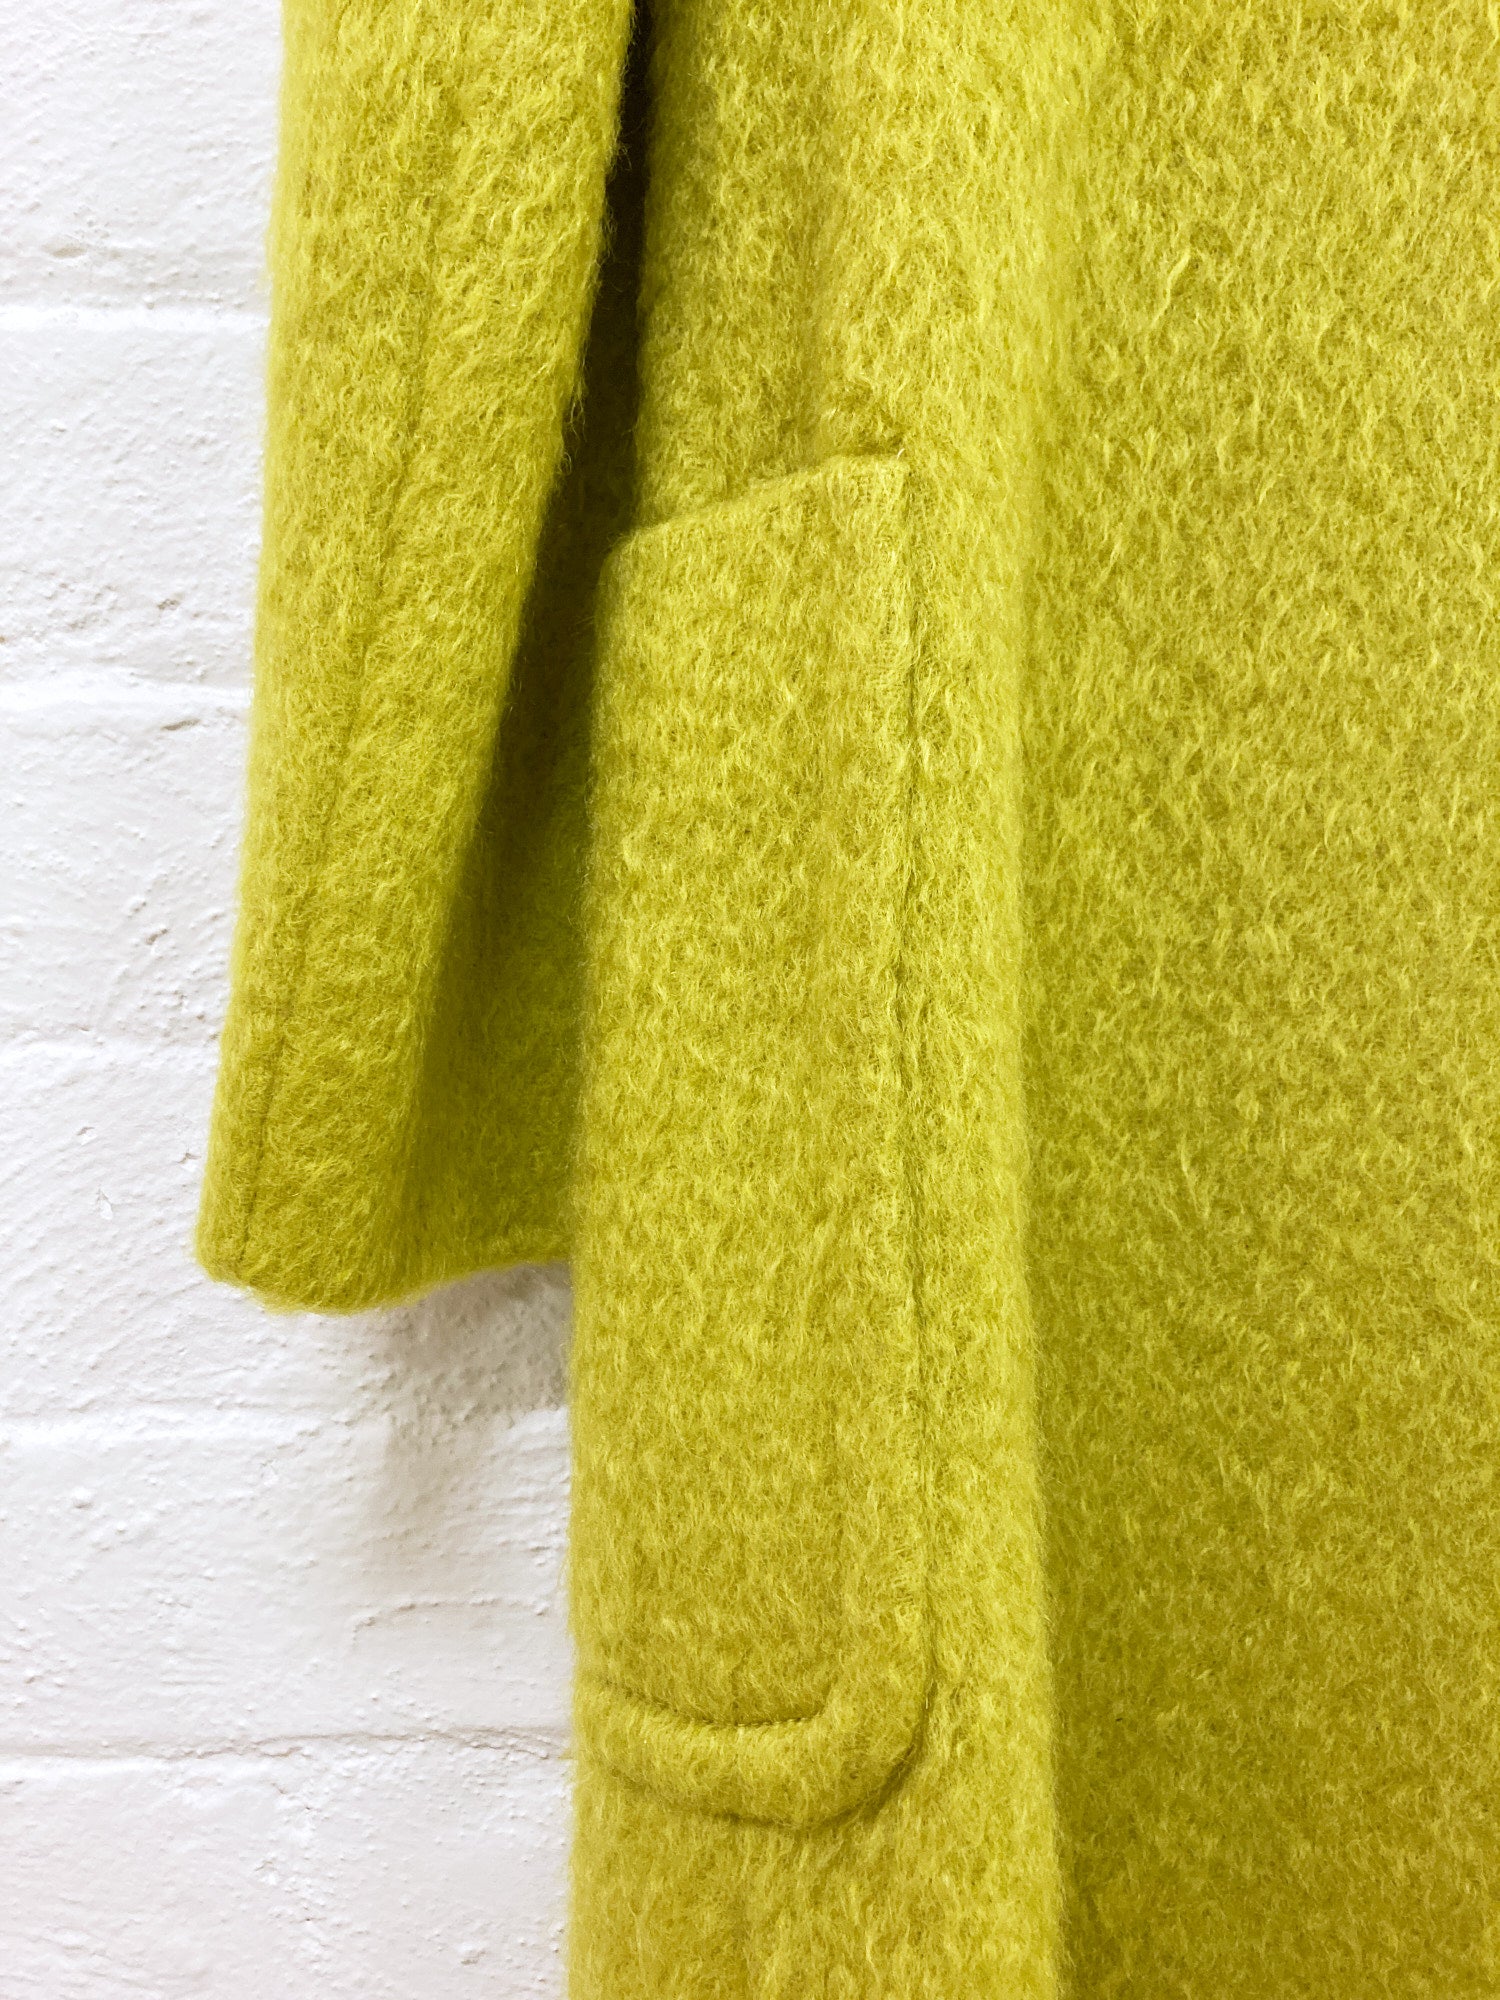 Gianfranco Ferre Studio 0001 lime green wool double-breasted coat - 40 8